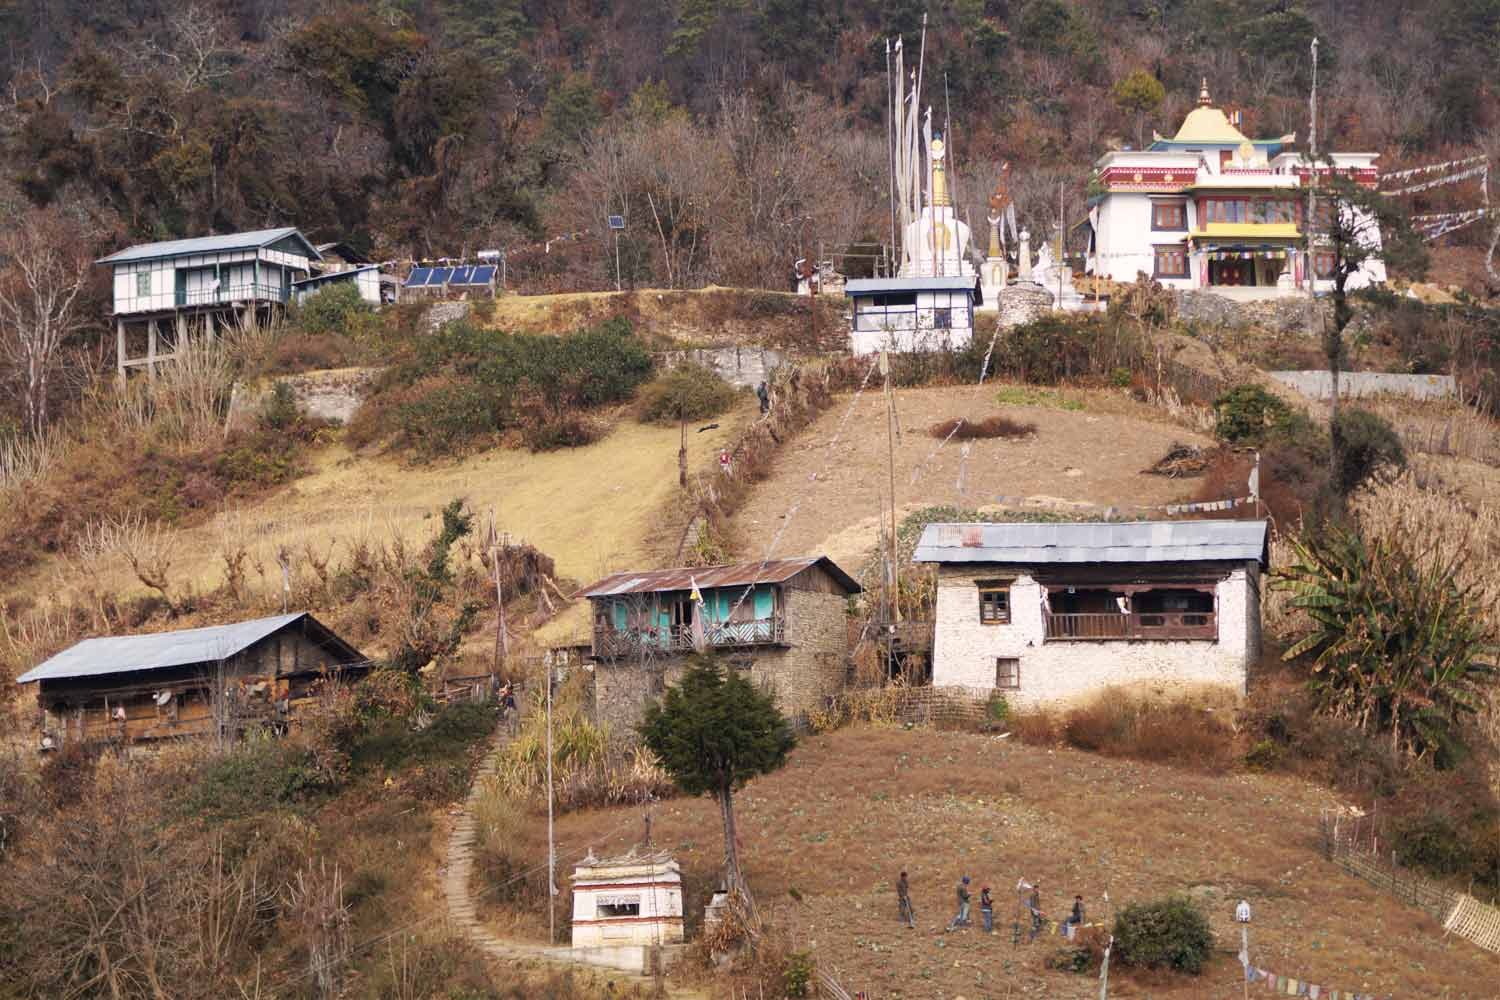 Monpa villages